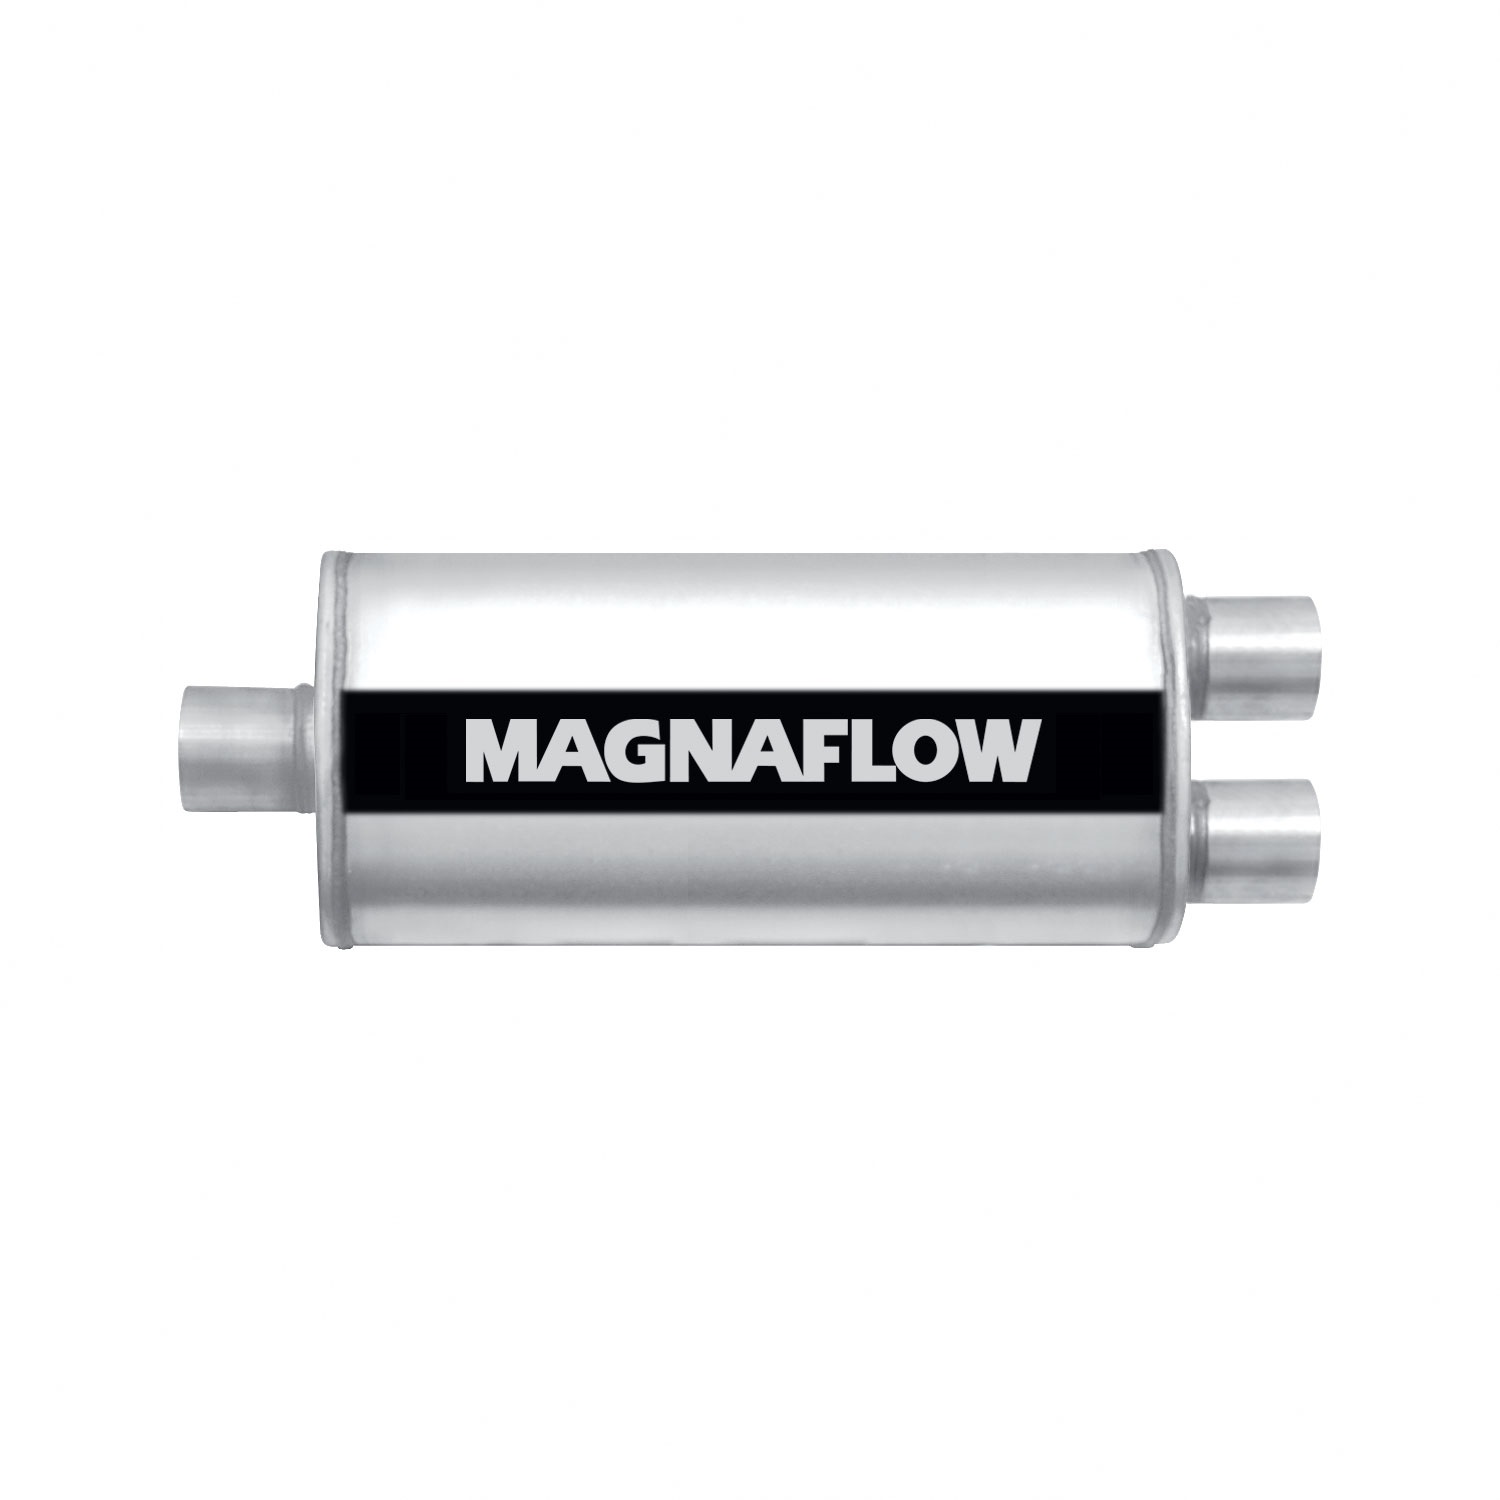 Magnaflow Performance Exhaust Magnaflow Performance Exhaust 12258 Stainless Steel Muffler